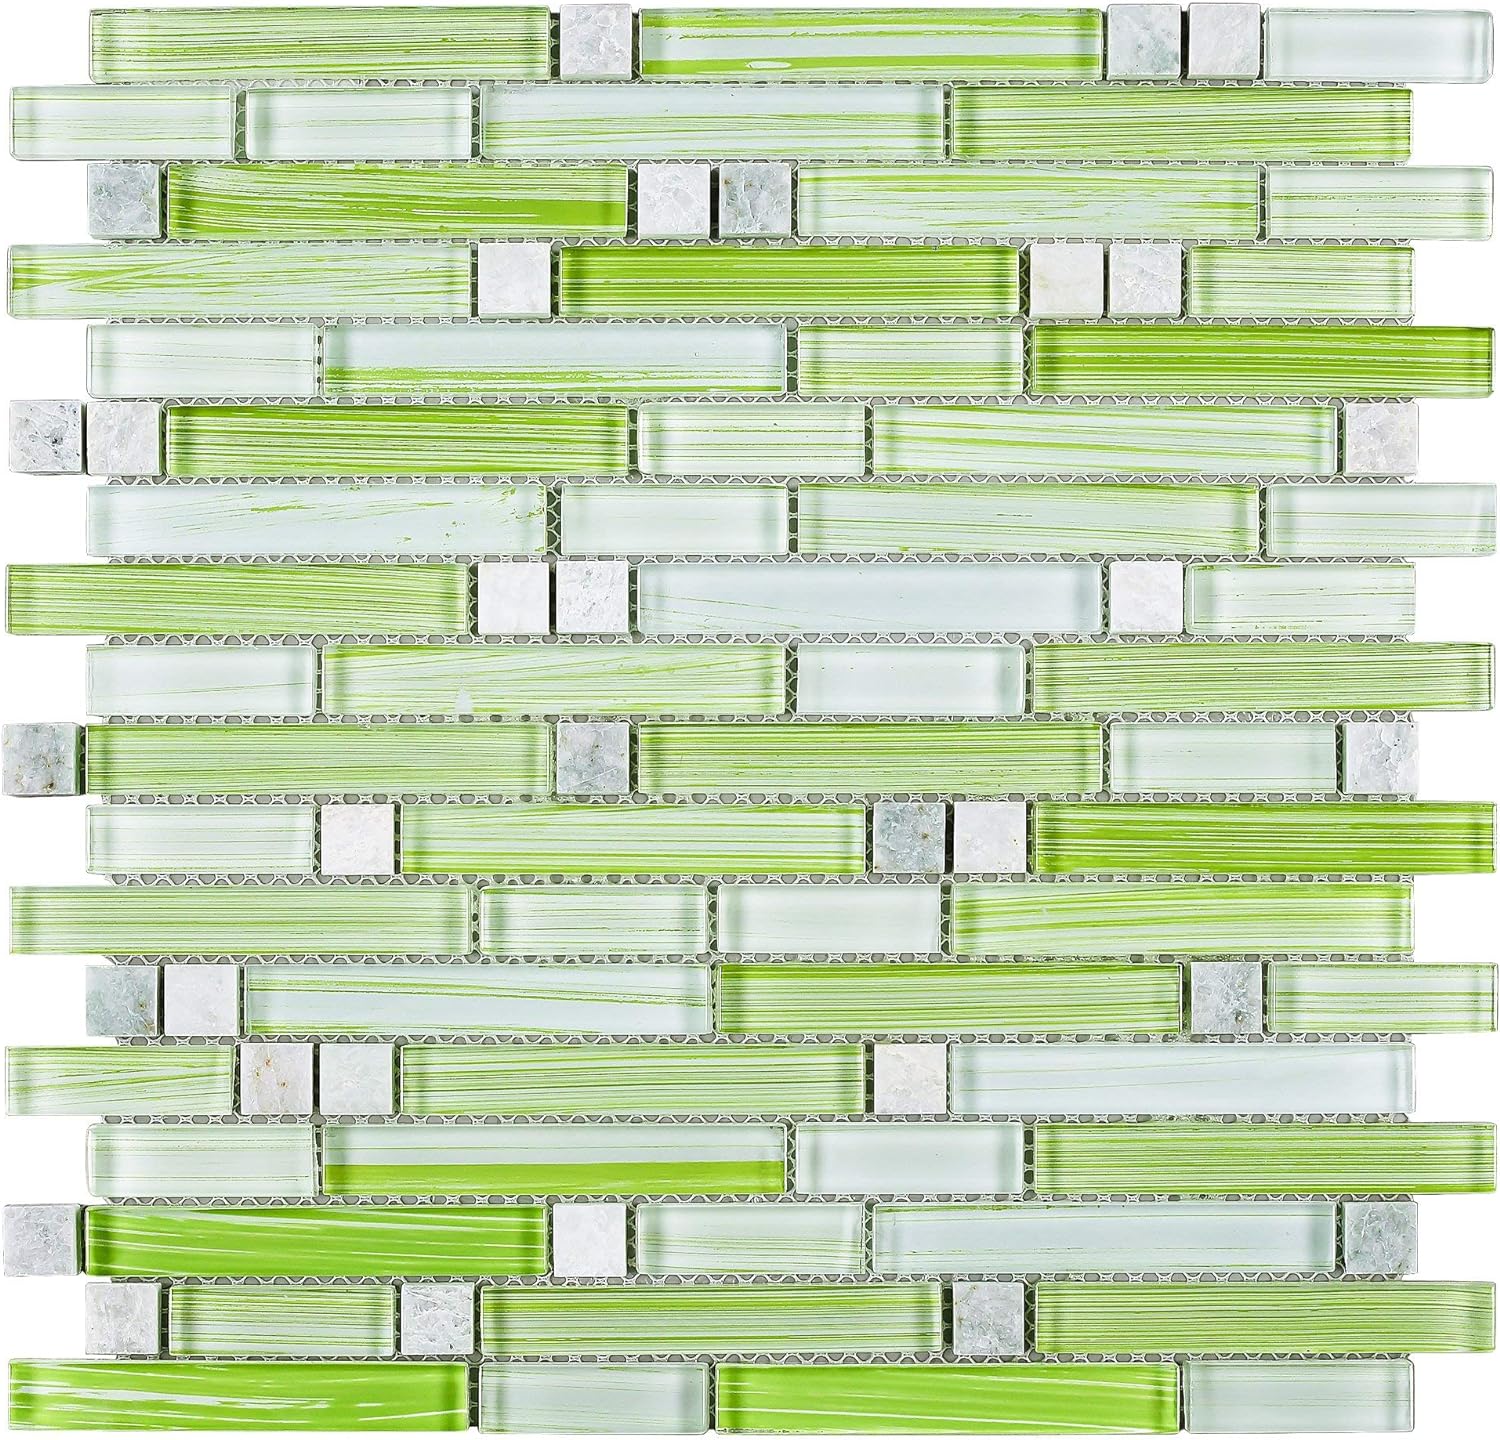 TNLQG-04 Apple Green Glass Stripe Floral Mosaic Wall Tile -Kitchen and Bath backsplash